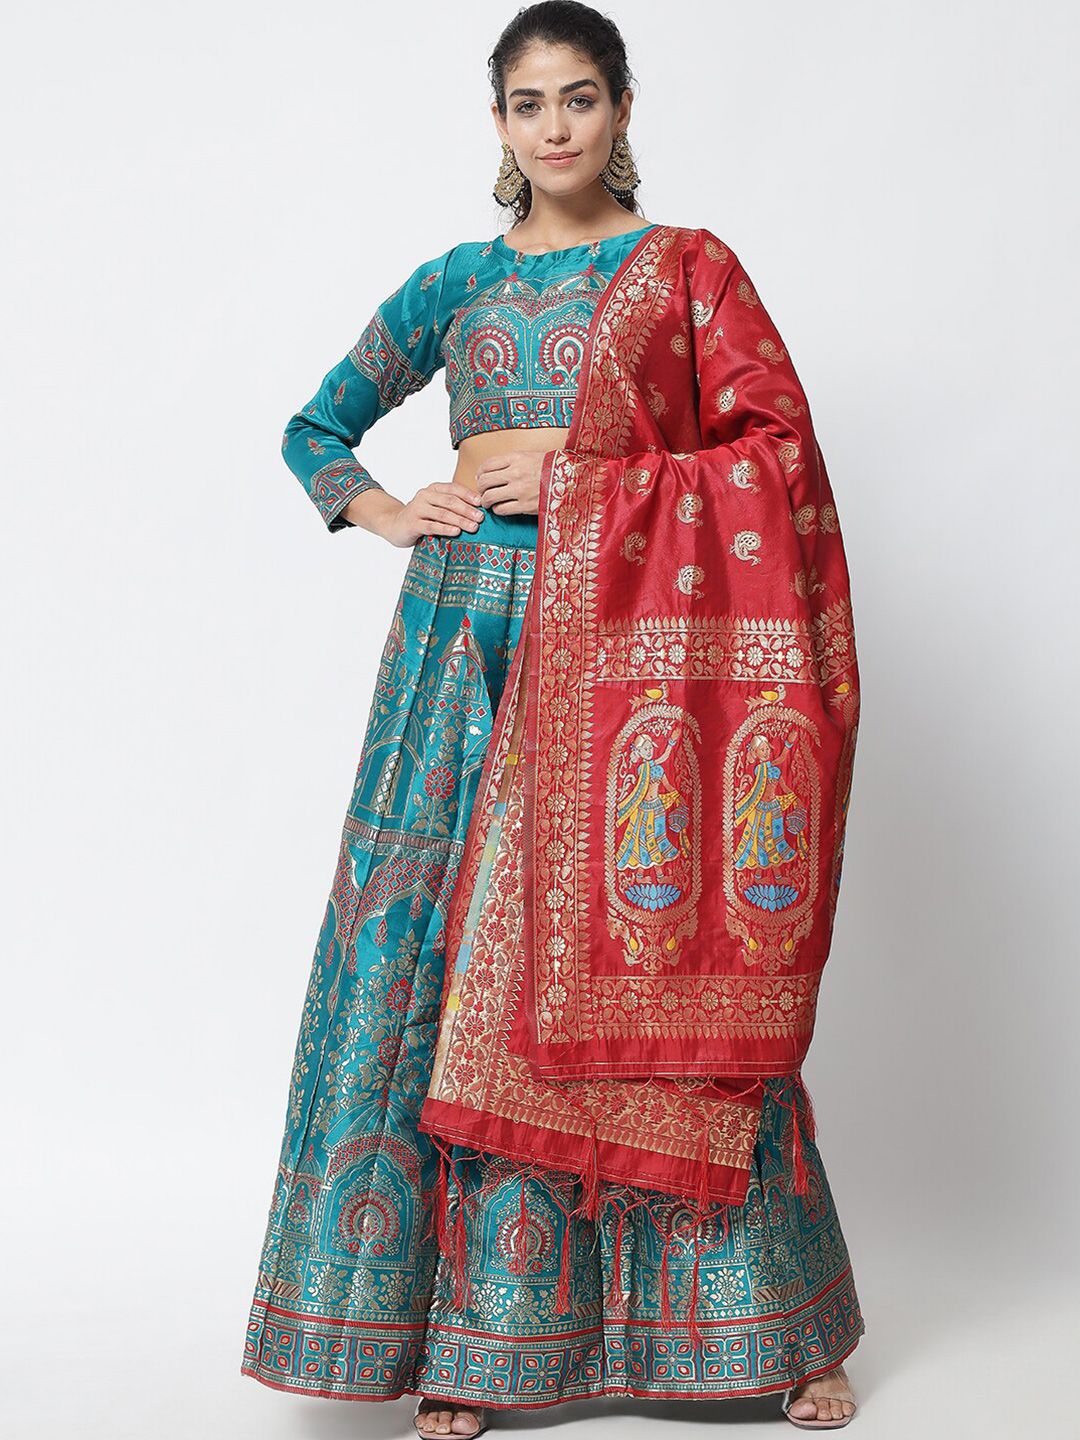 DIVASTRI Women Turquoise Blue & Red Printed Semi-Stitched Lehenga Choli With Dupatta Price in India